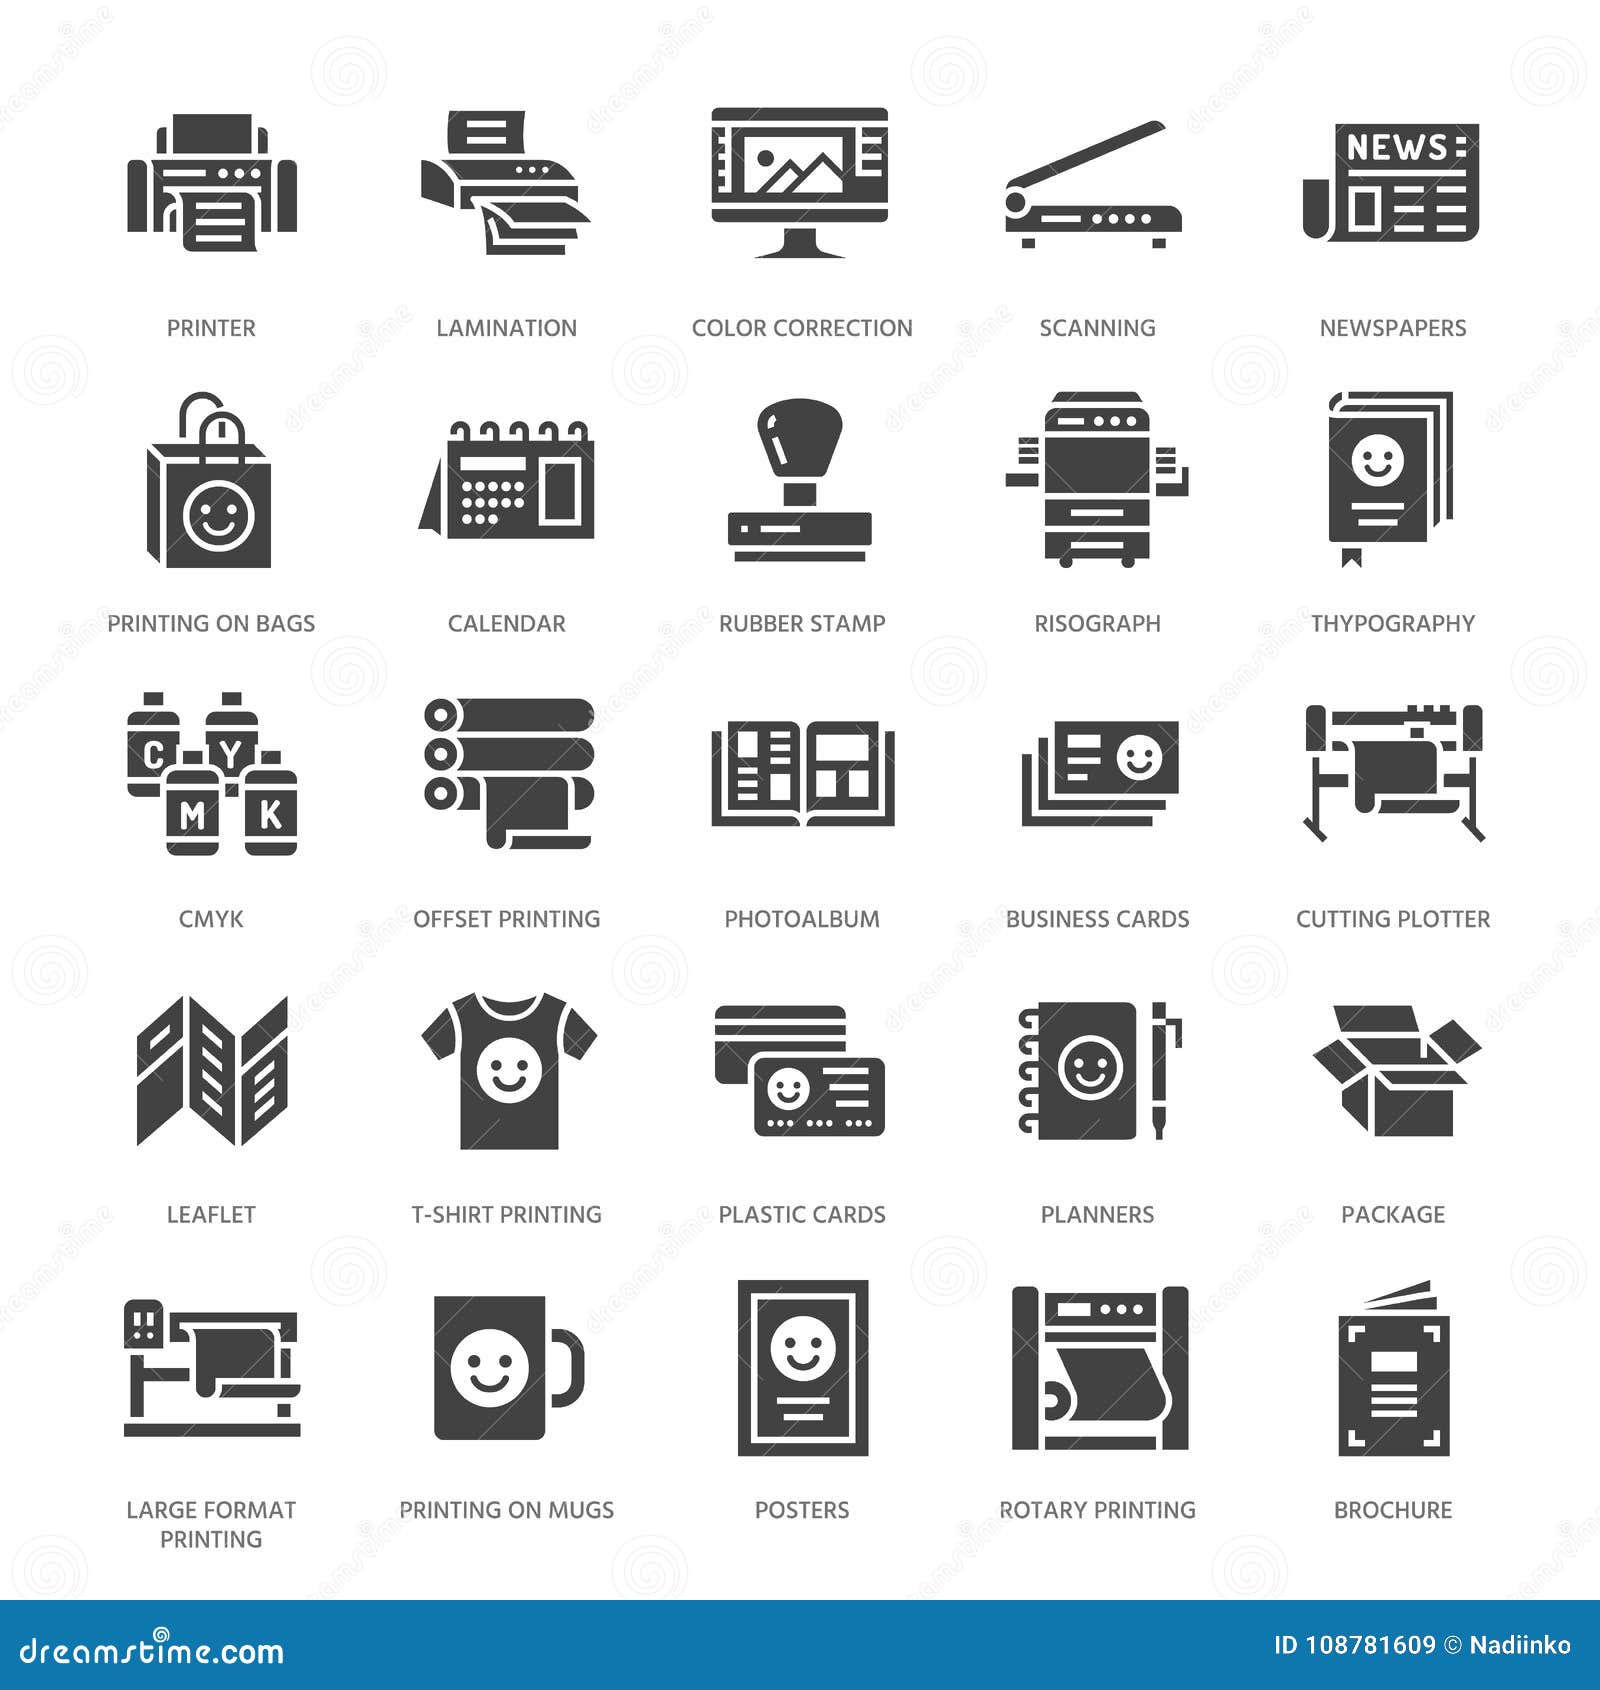 printing house flat glyph icons. print shop equipment - printer, scanner, offset machine, plotter, brochure, rubber